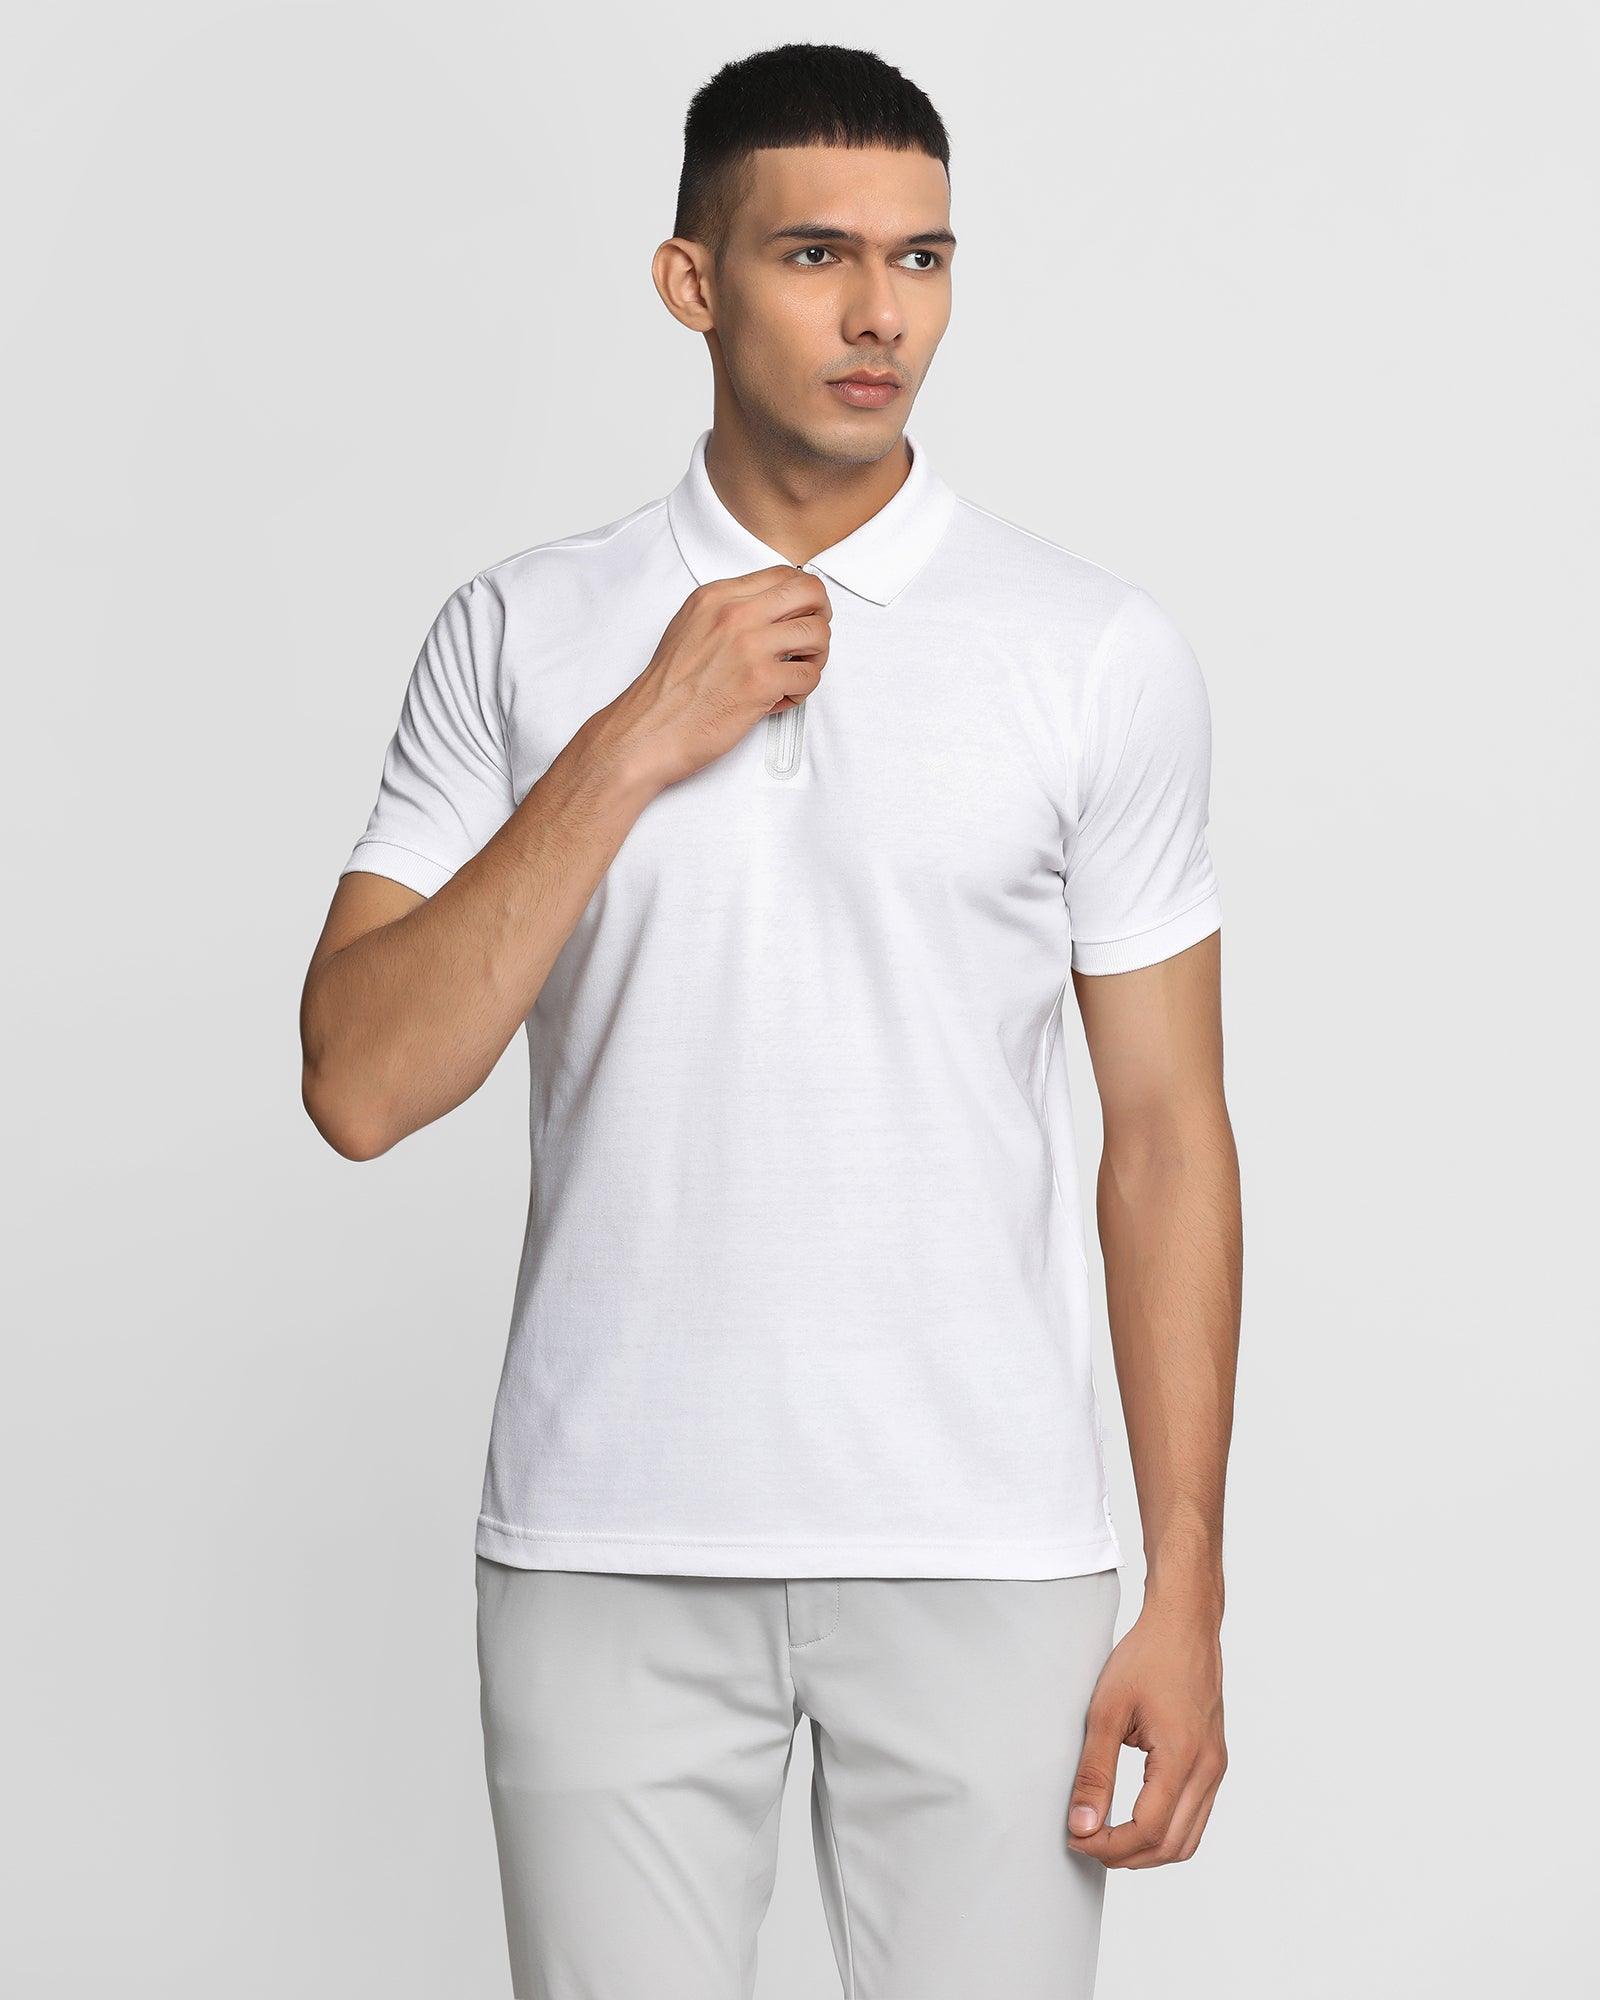 TechPro Polo White Solid T Shirt - Noah